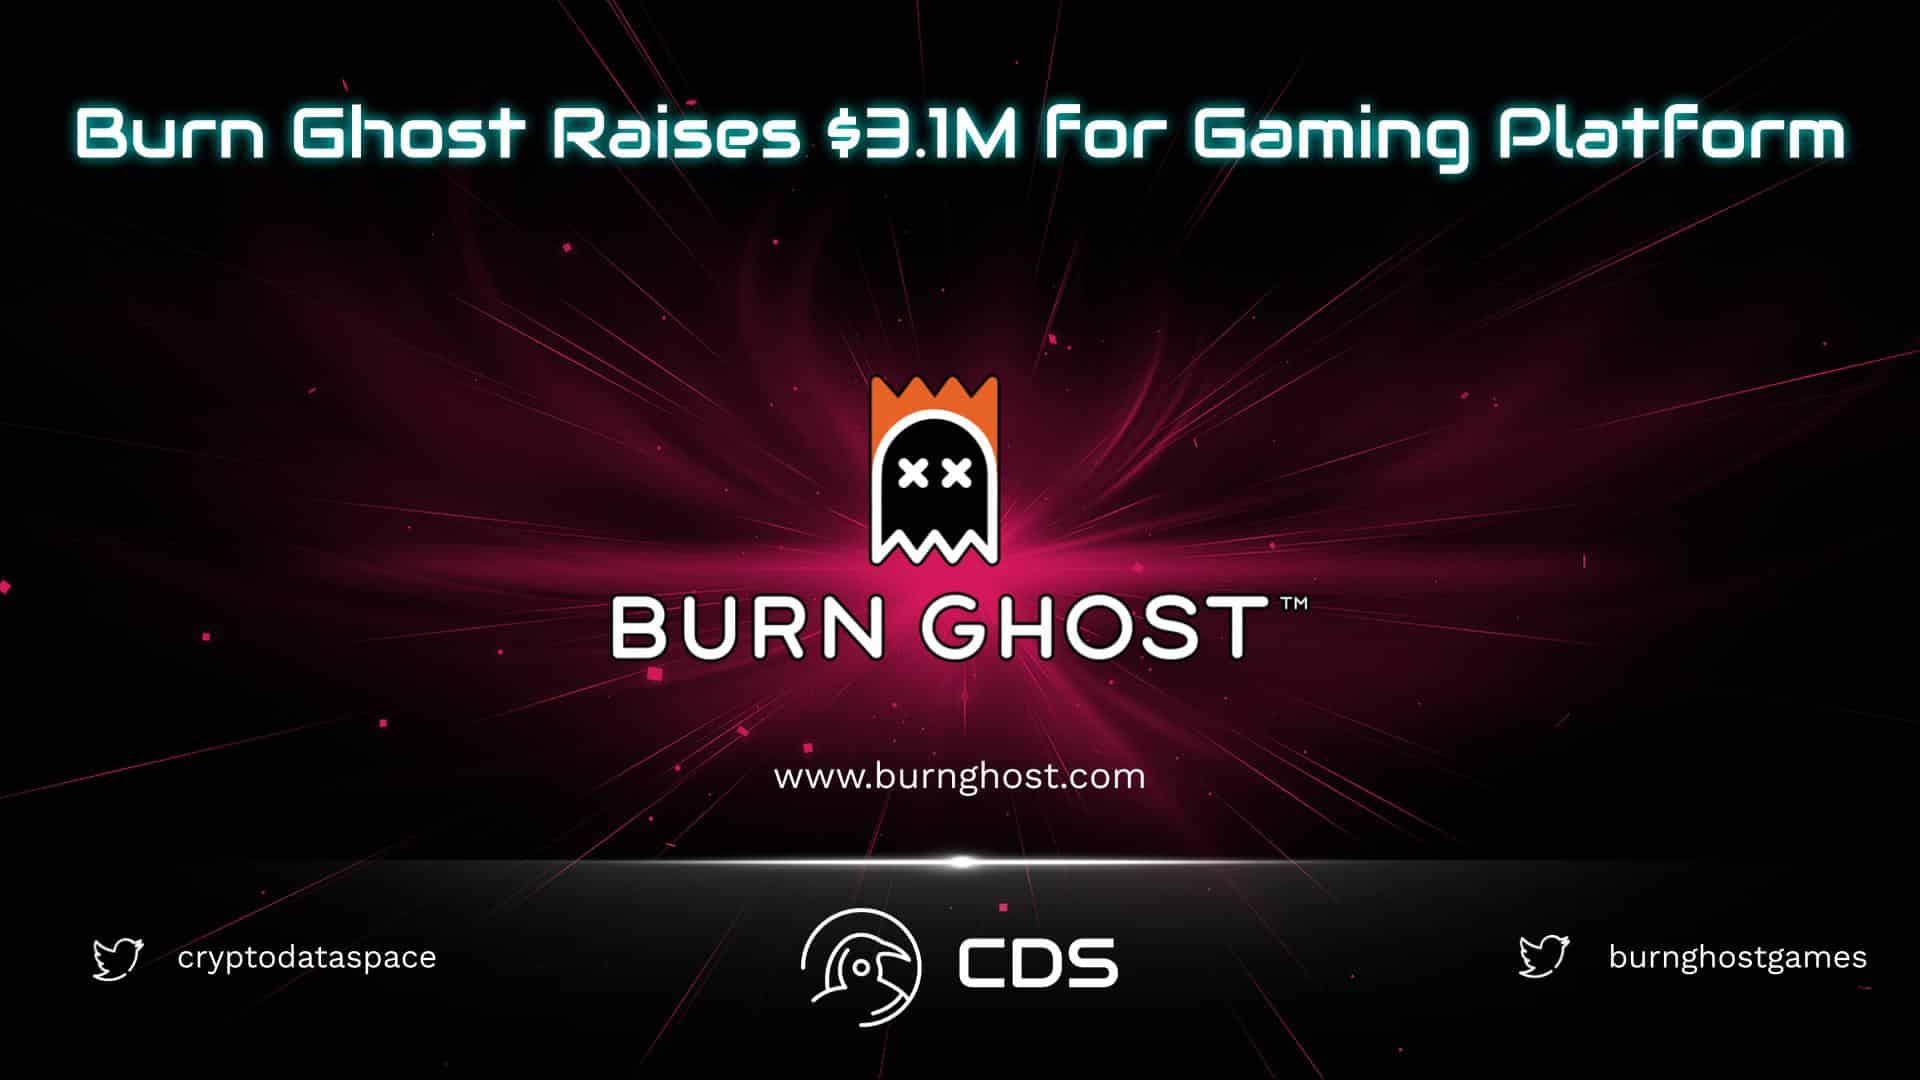 Burn Ghost Raises $3.1M for Gaming Platform